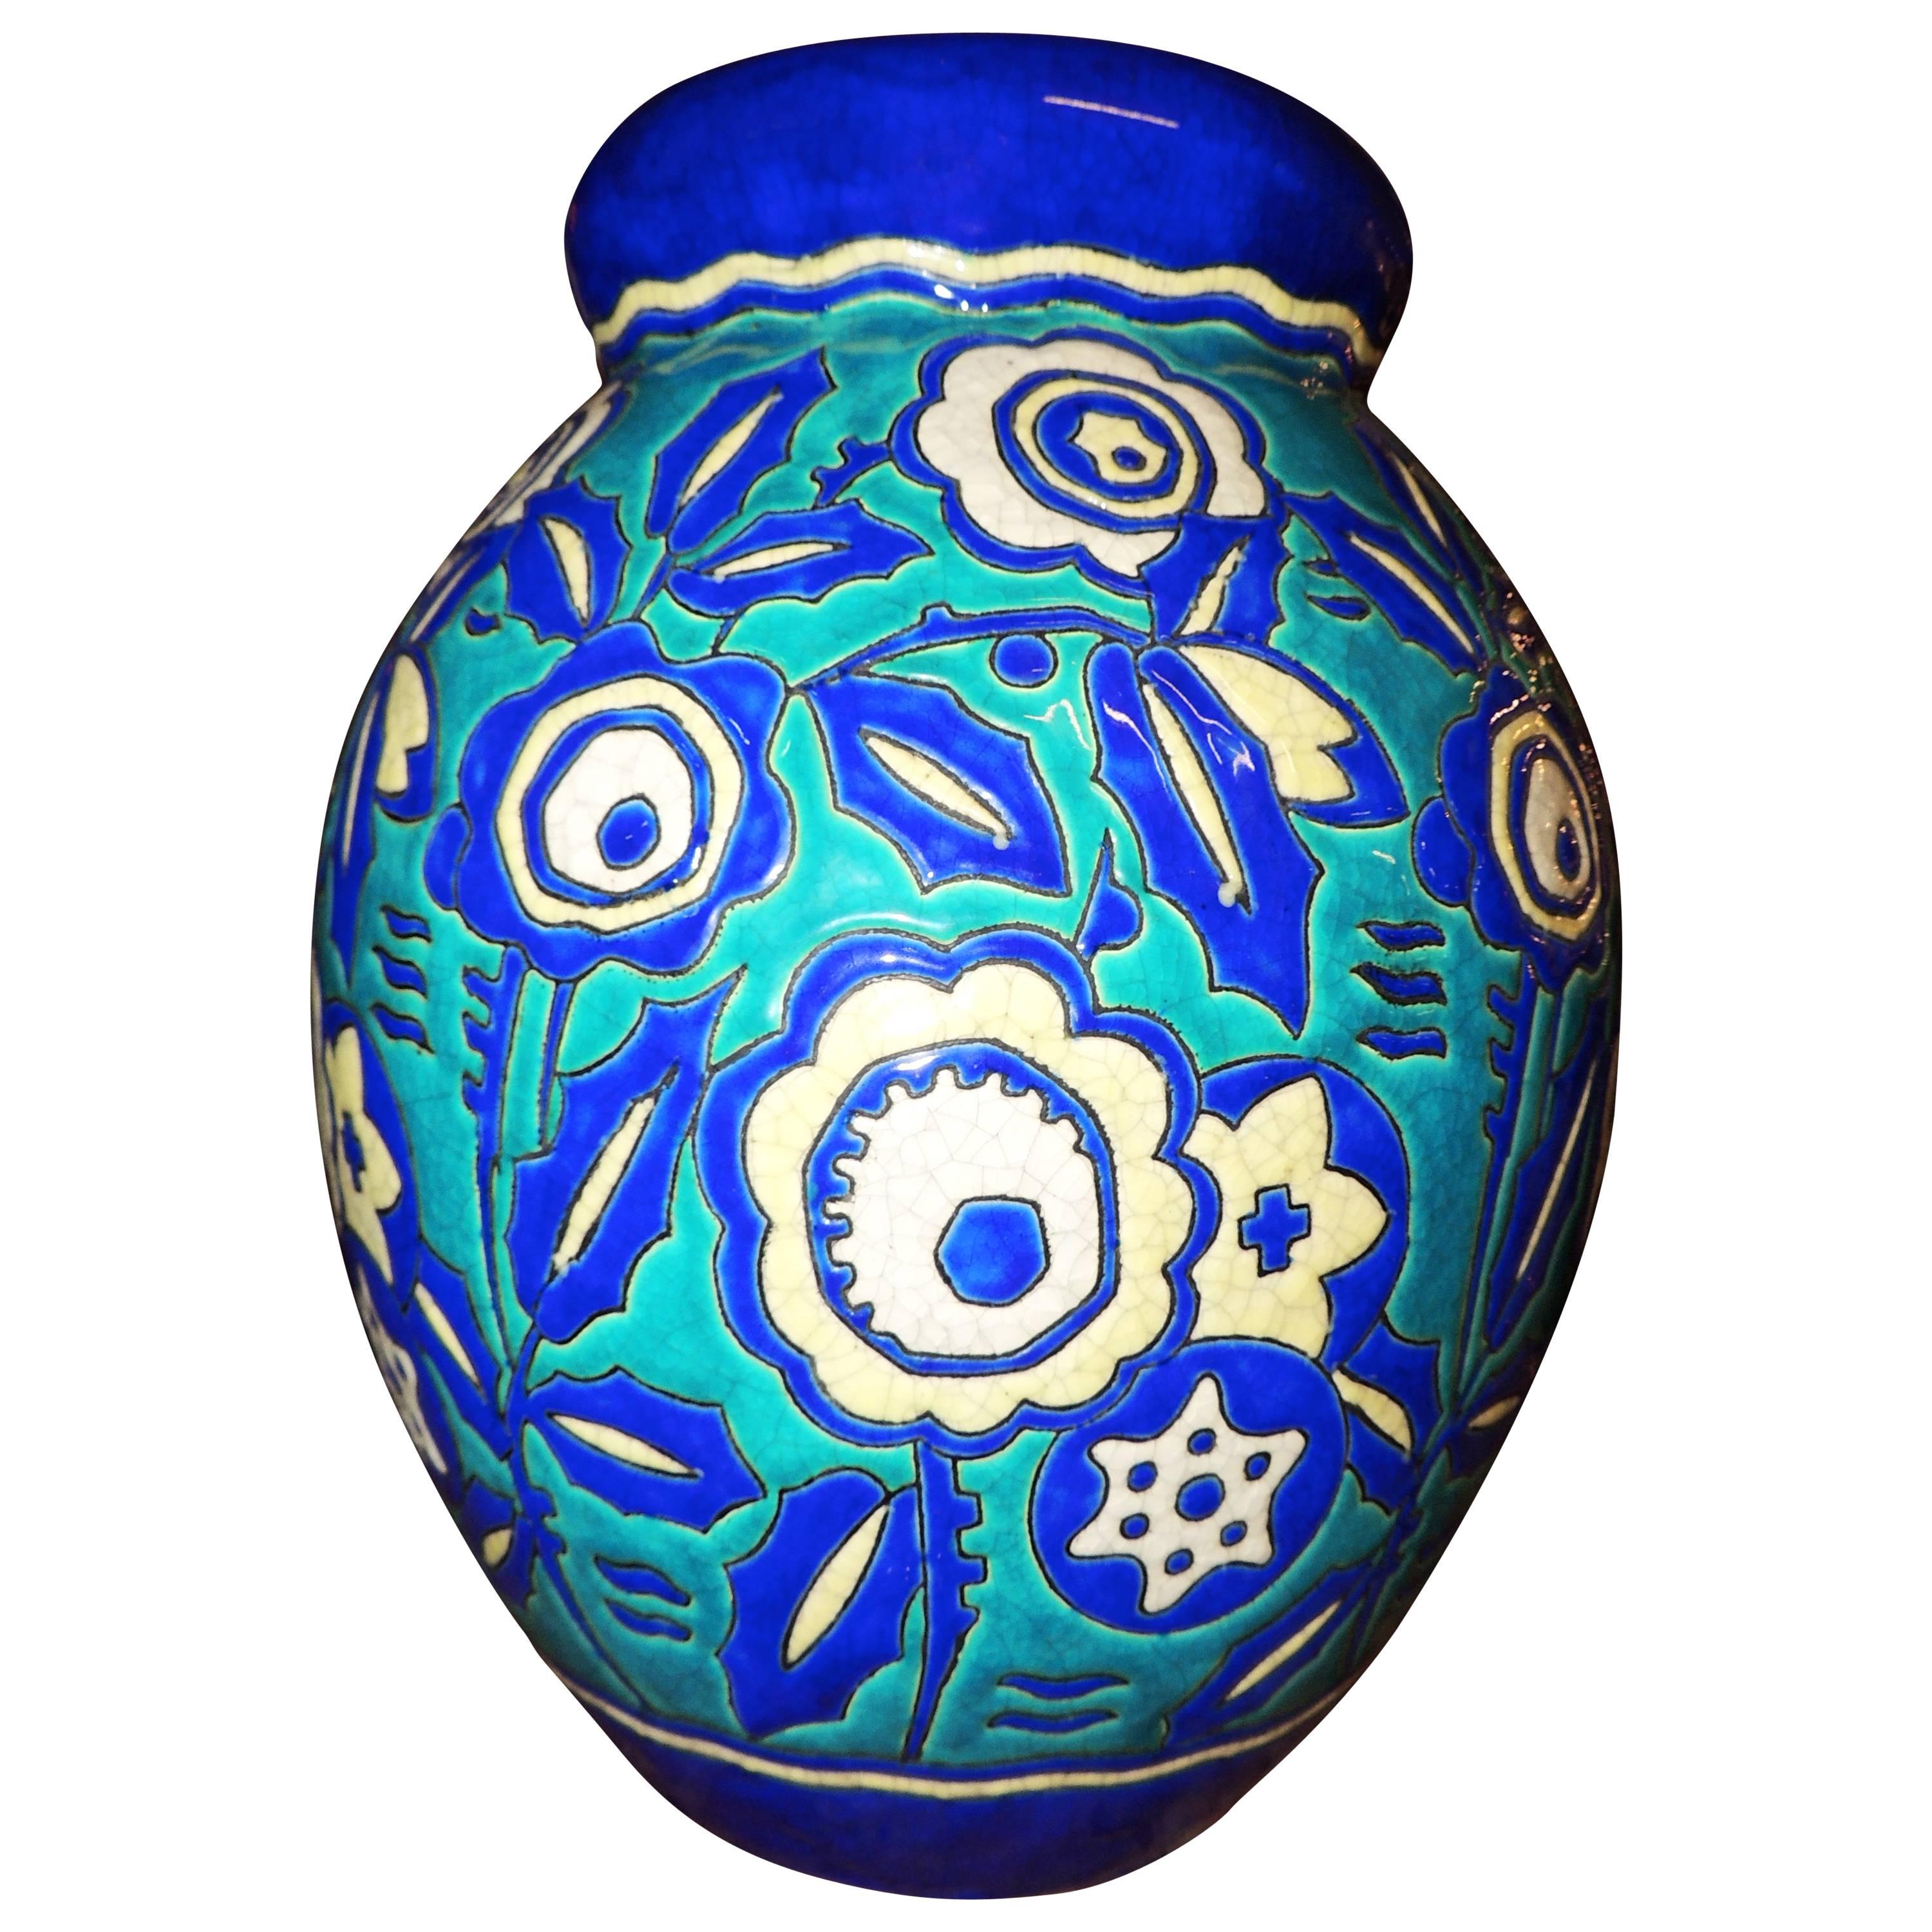 Catteau Ceramic Cloisonne Boch Vase